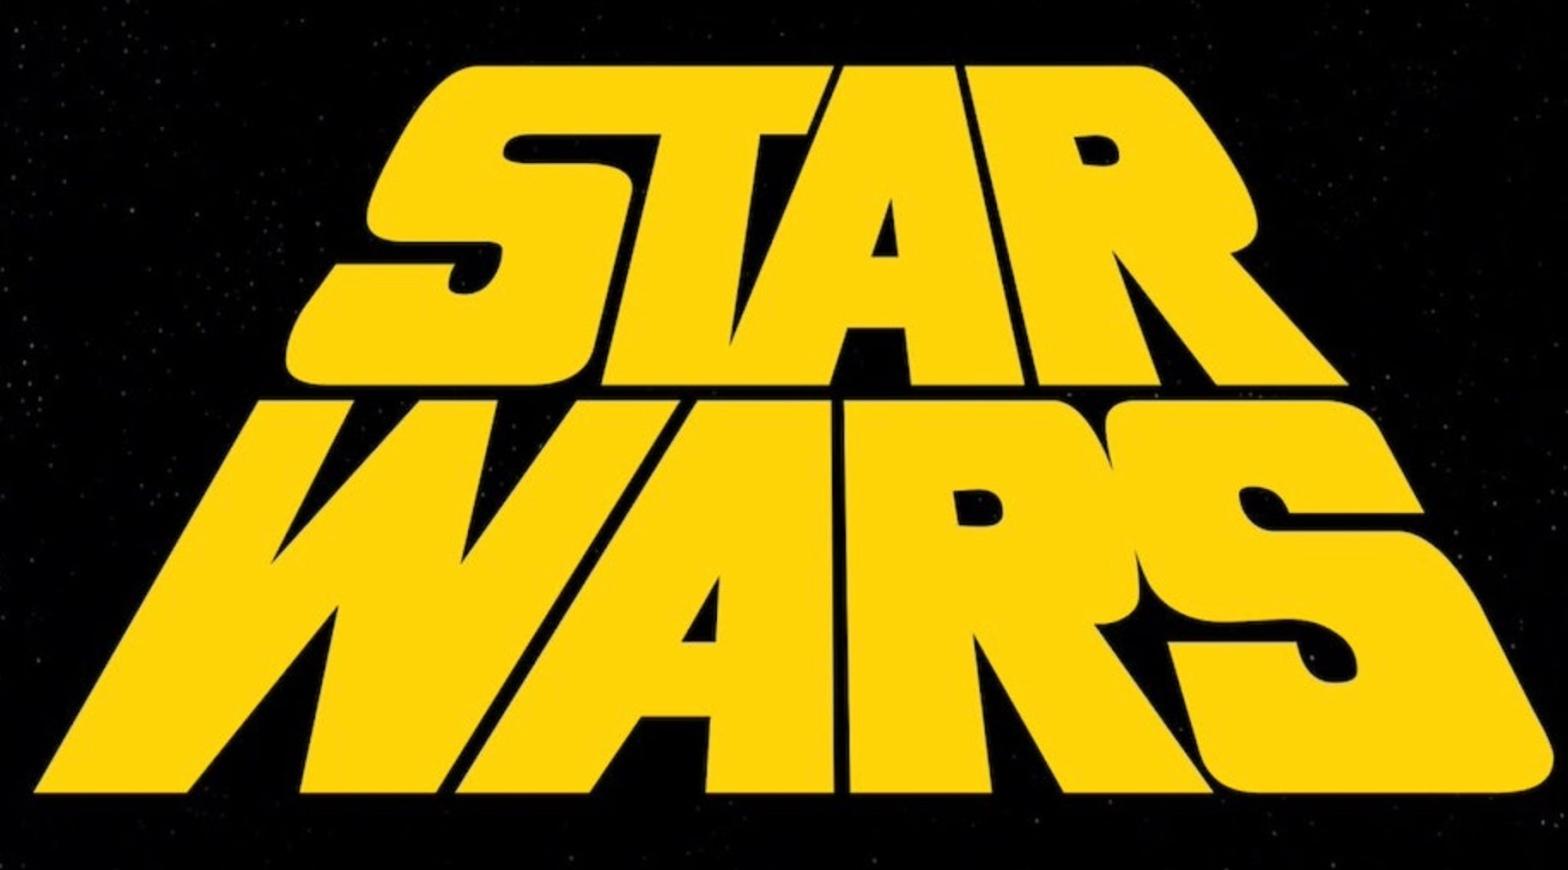 Old school Star Wars logo. (Image: Lucasfilm)